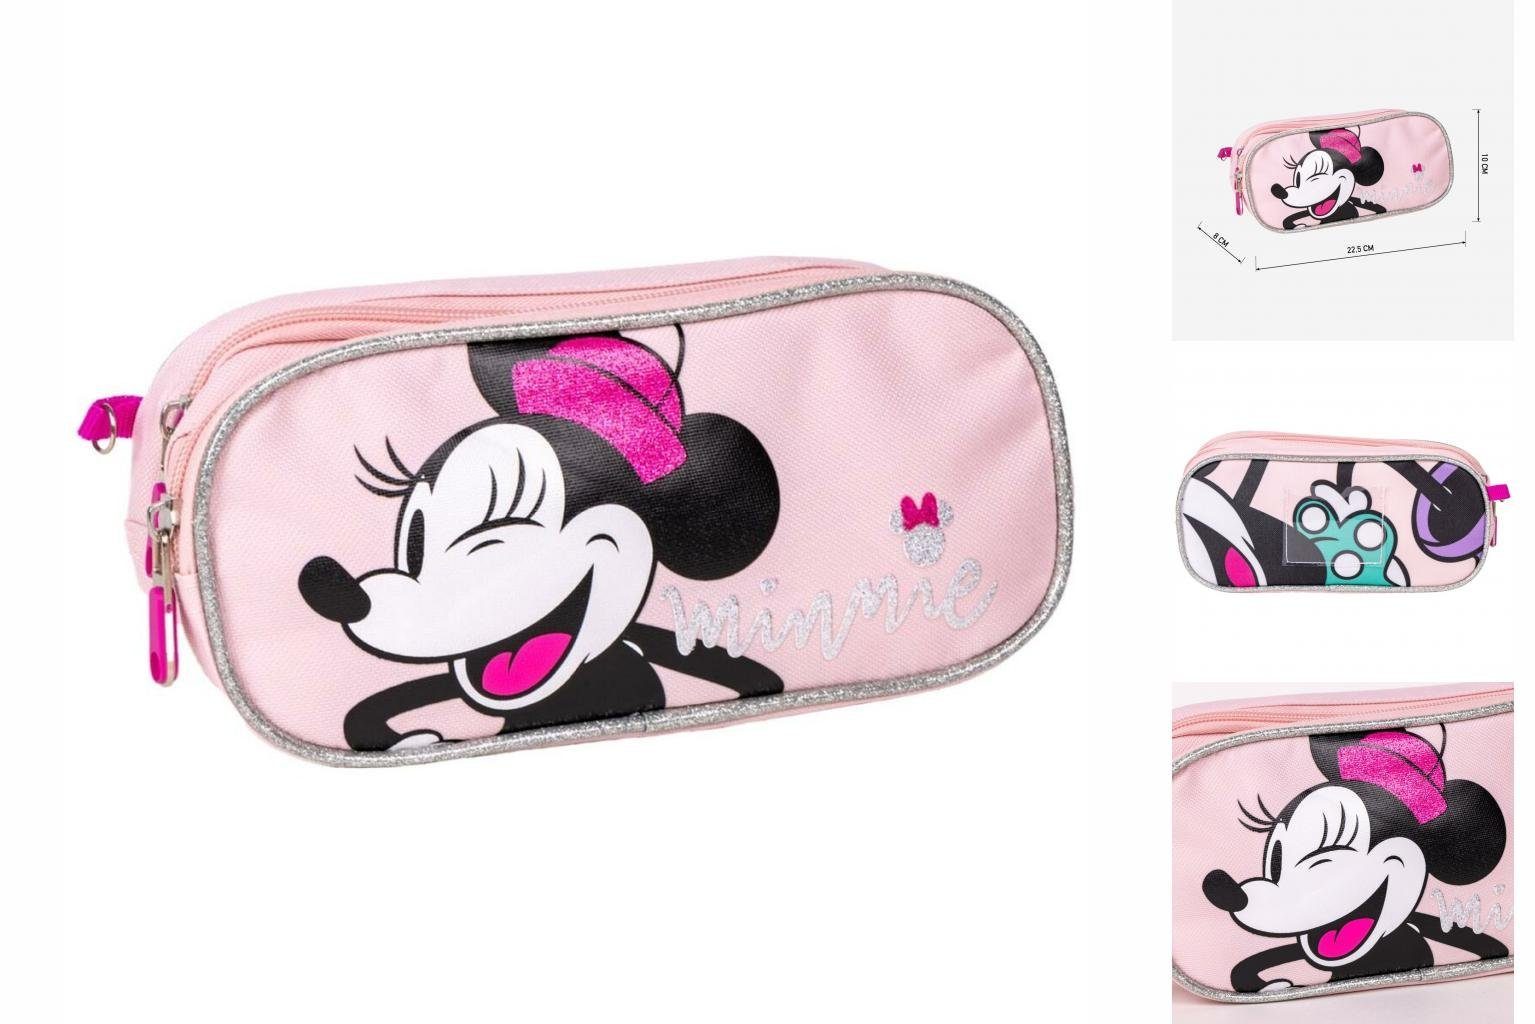 cm Mehrzweck-Etui 10 Zweifaches x x Minnie Mouse Federtasche Mouse 22,5 Minnie 8 Disney Rosa